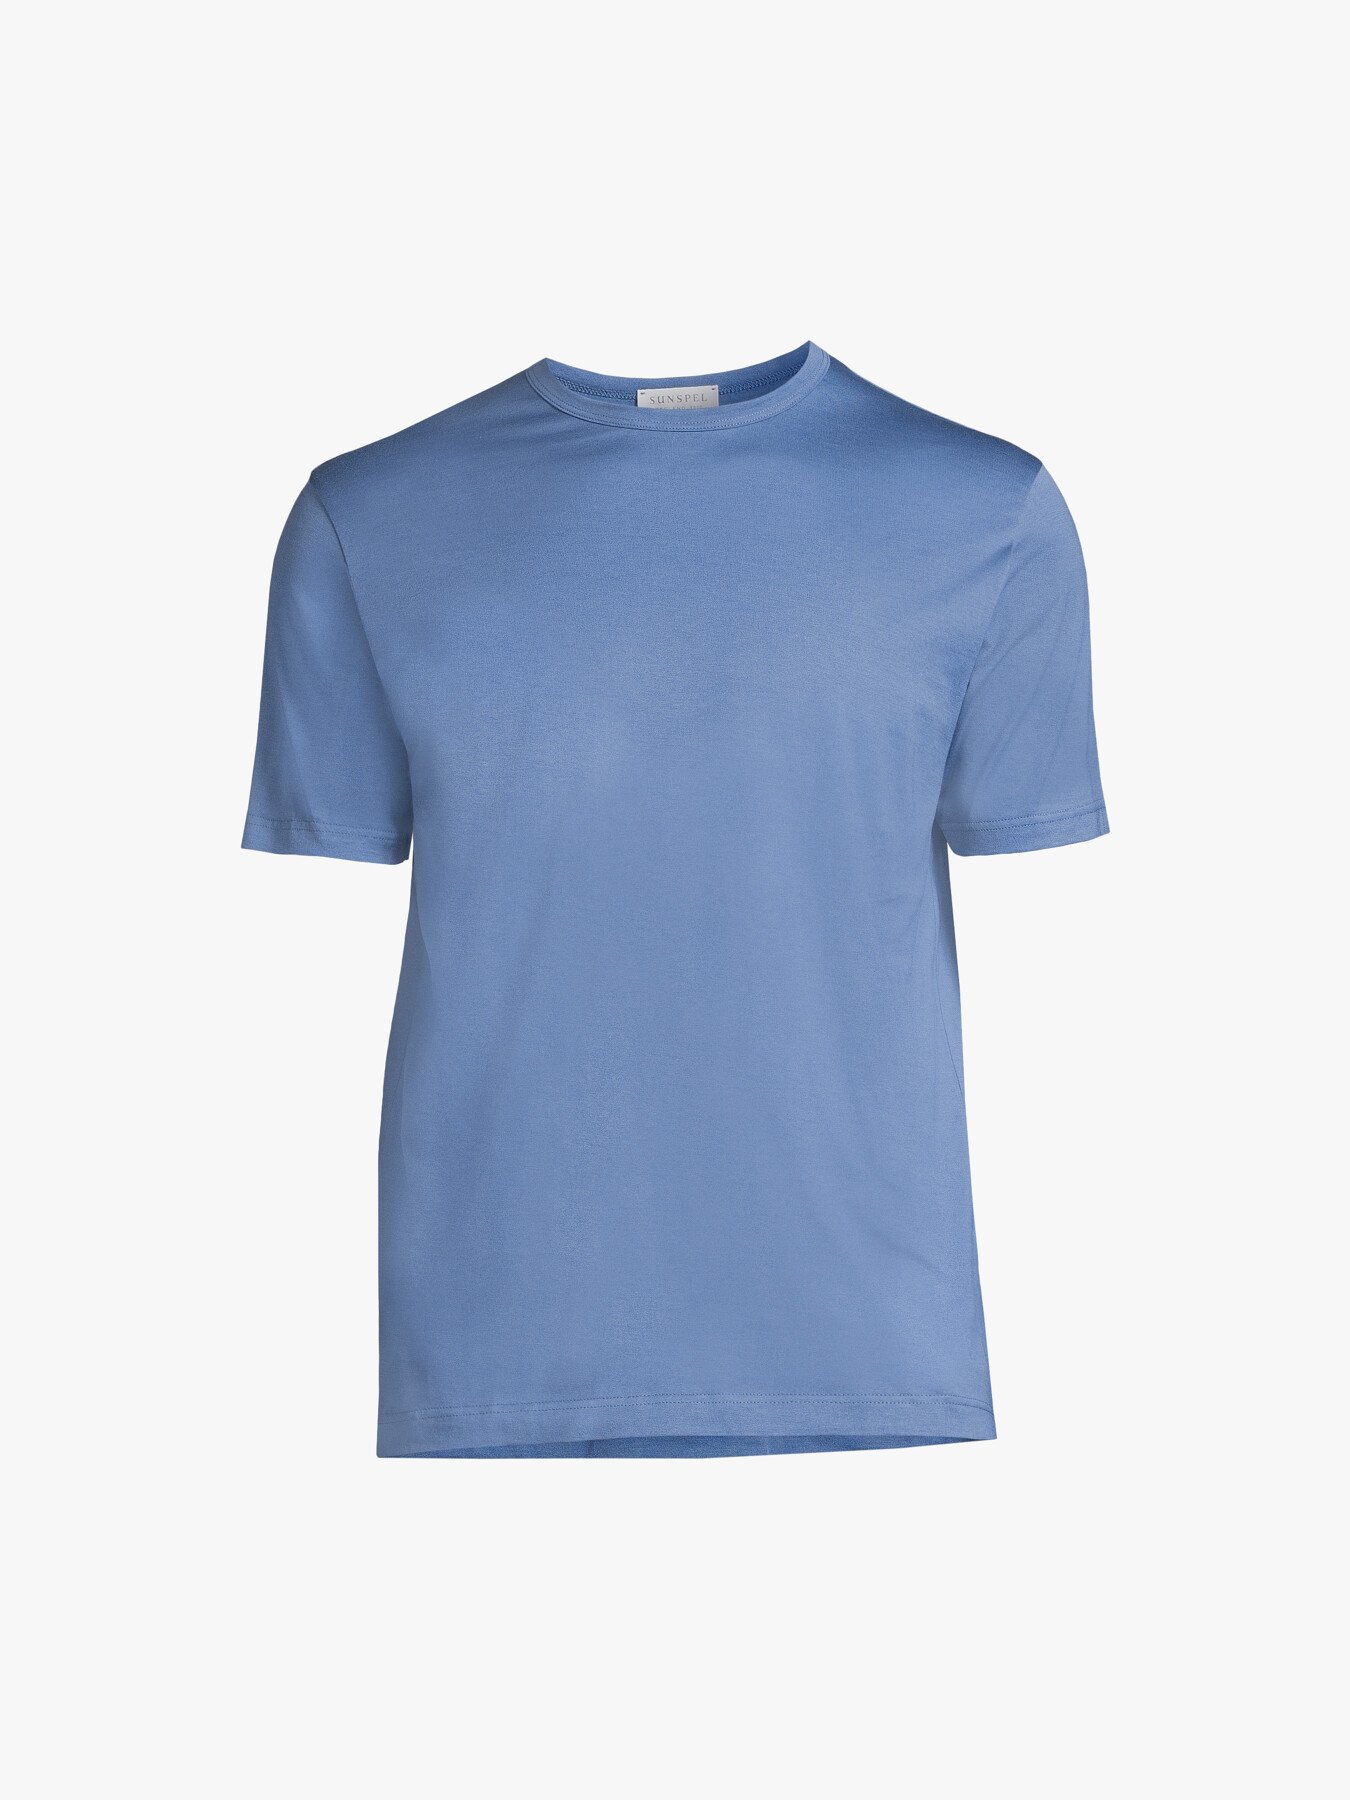 Sunspel Classic Crew Neck T-Shirt | Plain | Fenwick